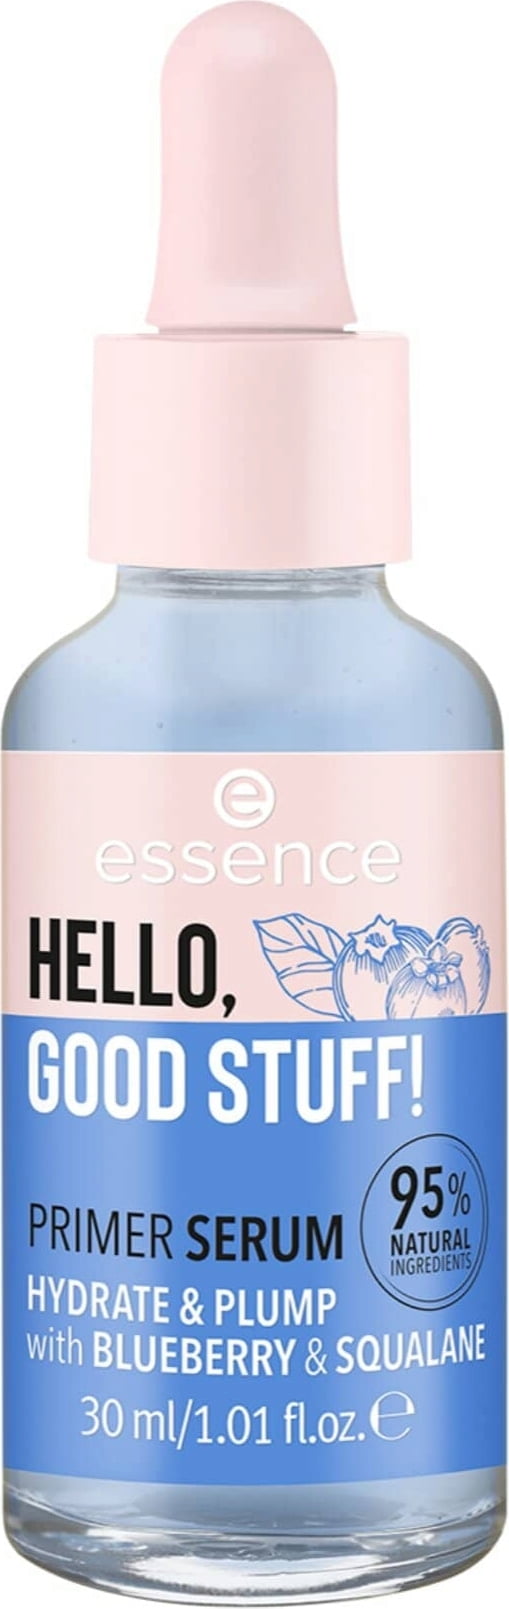 New essence Hello, Good Stuff! Primer Serum